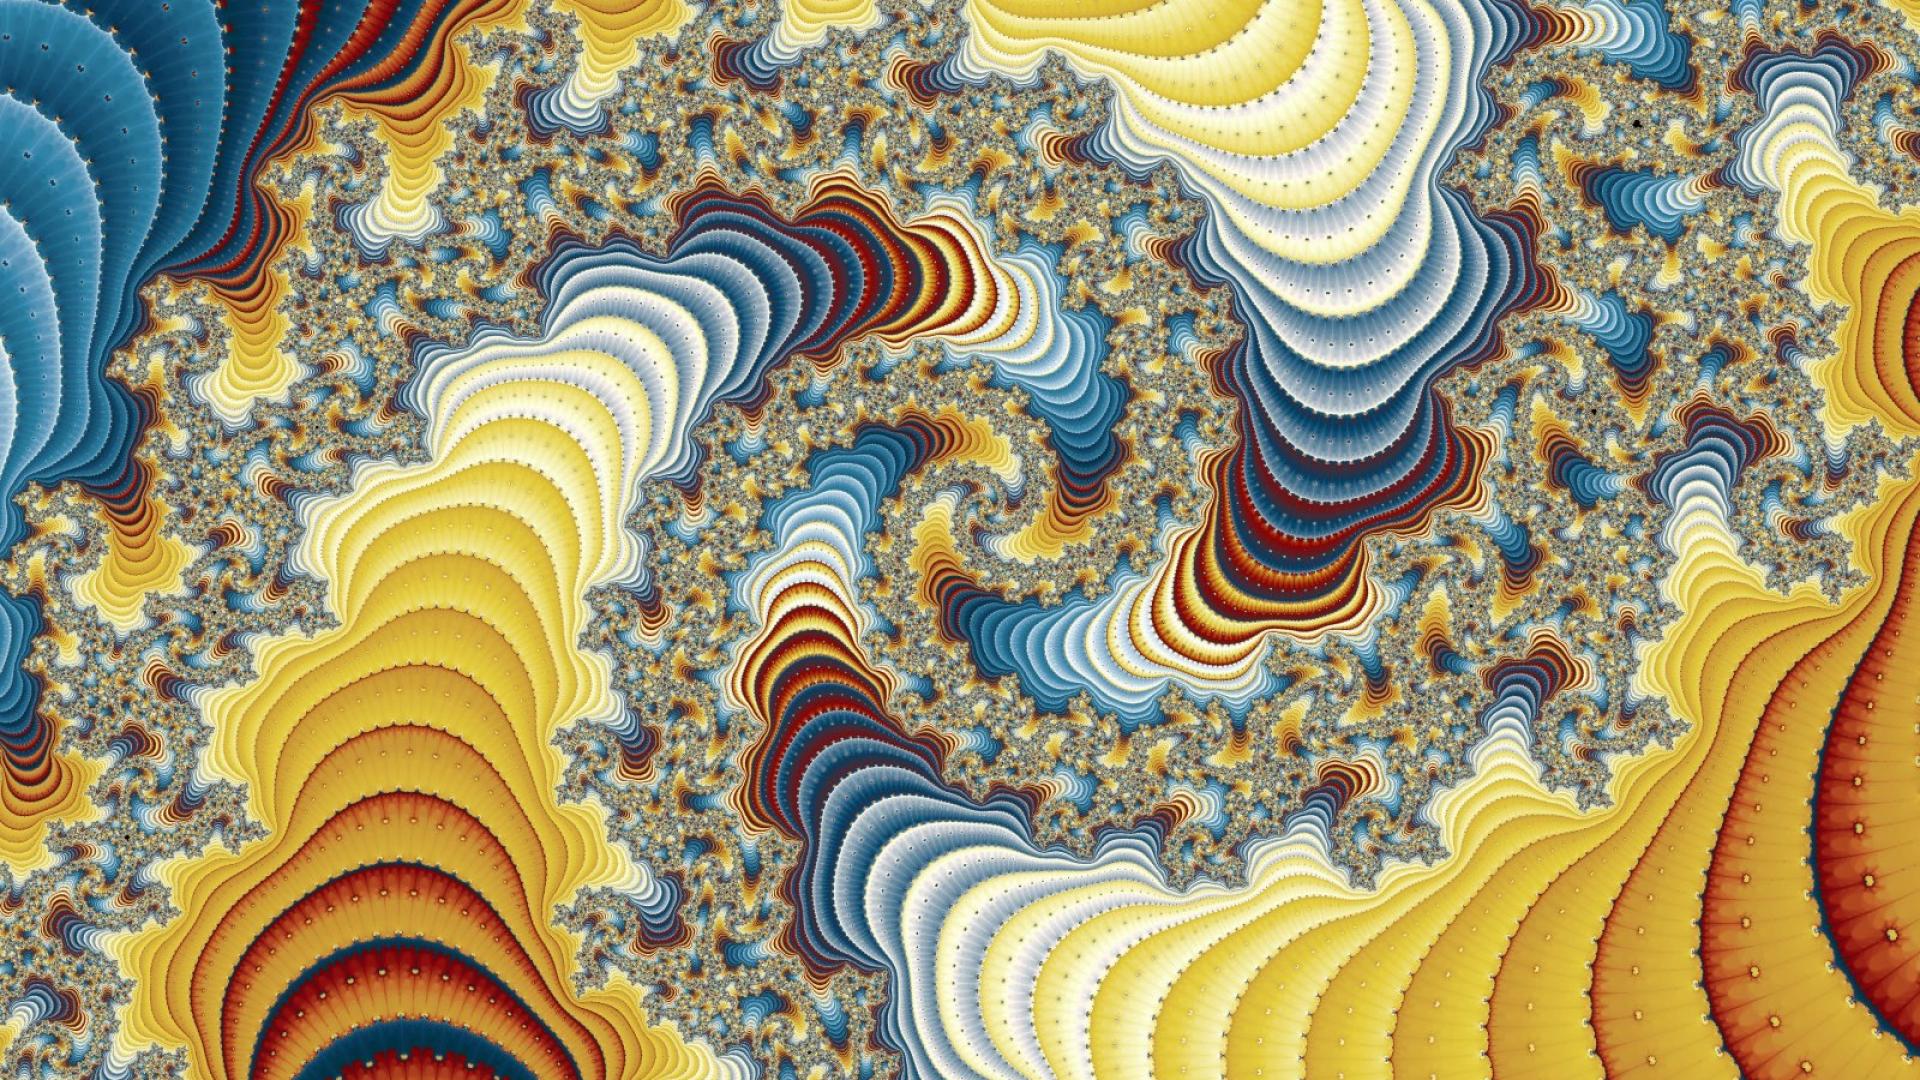 Trip fractal hd wallpaper - - HQ Desktop Wallpapers